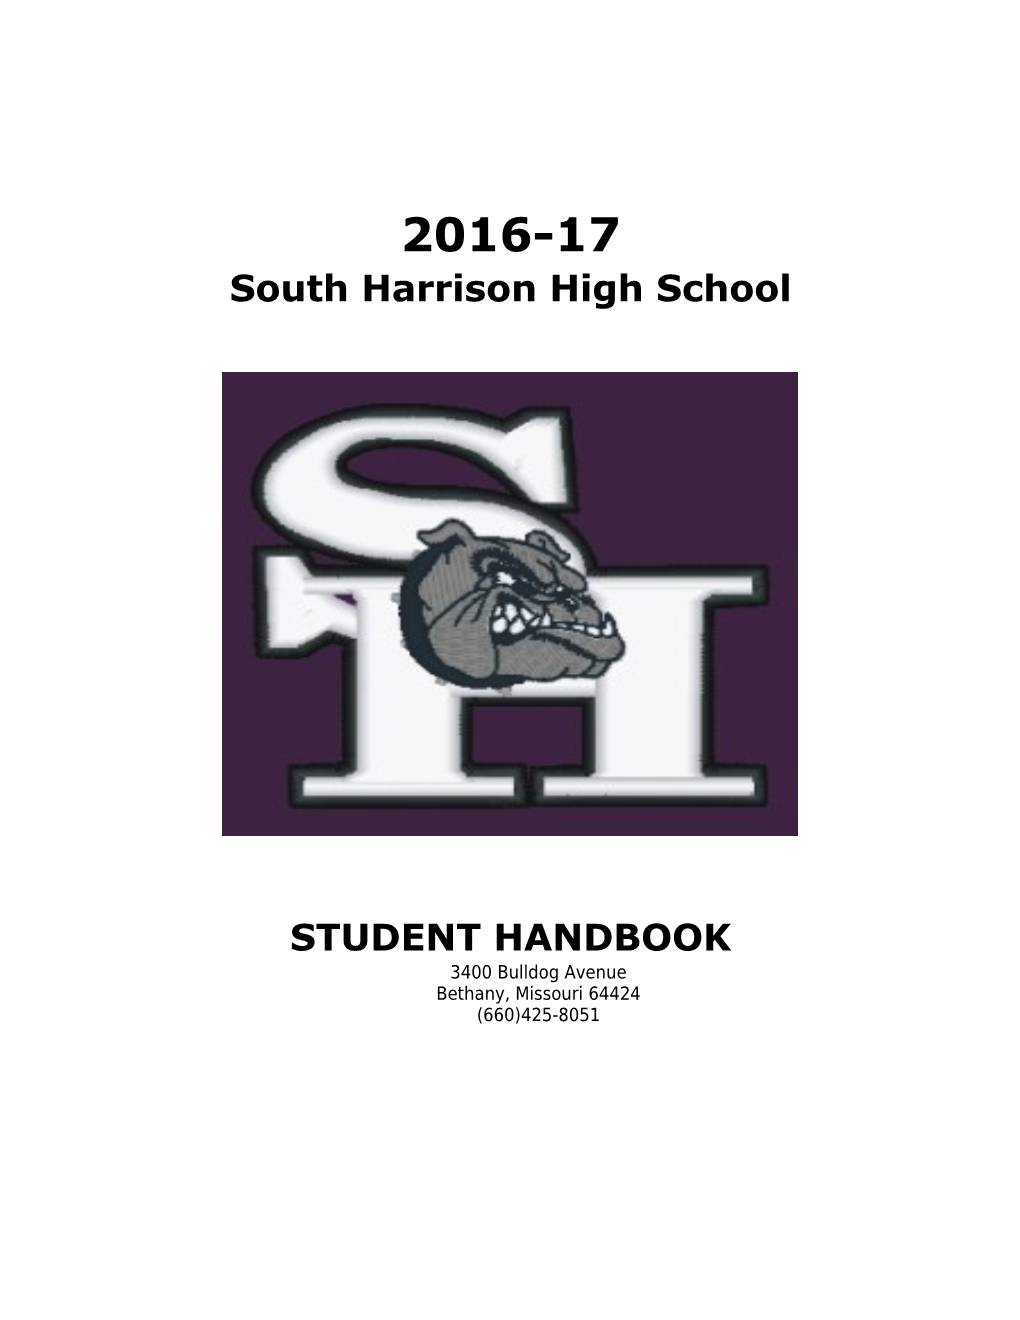 South Harrison High School